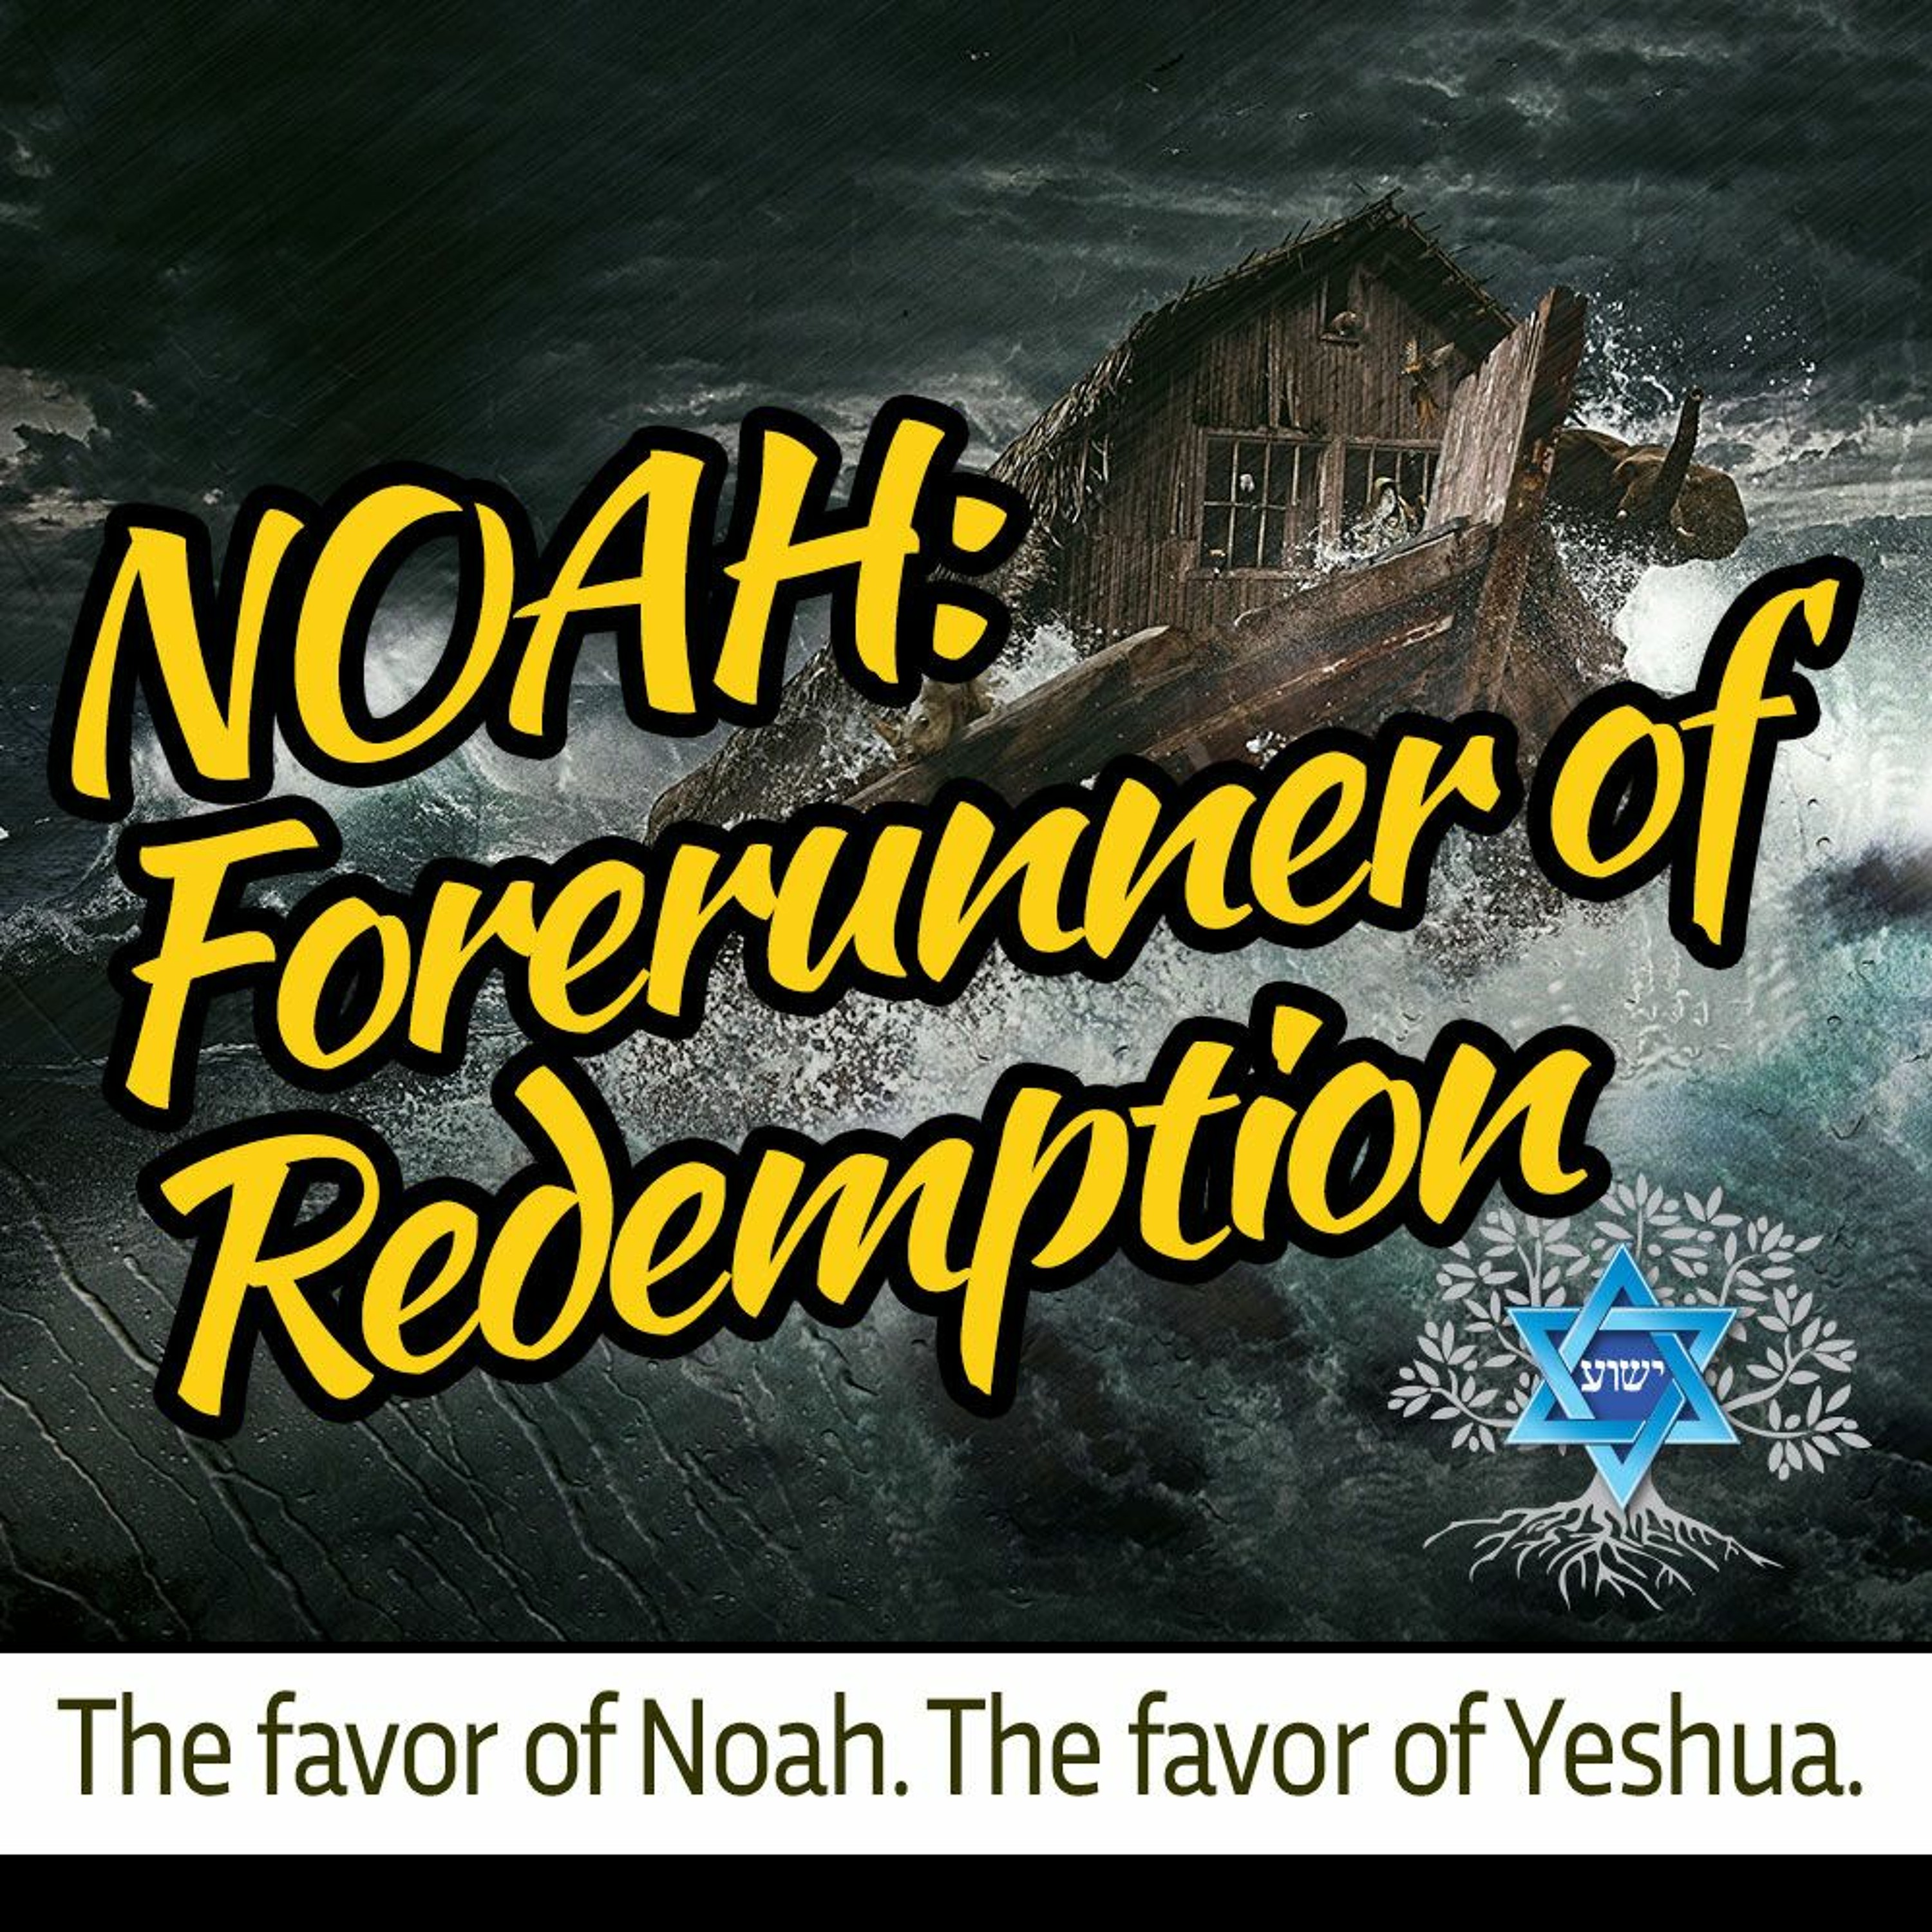 Noah - Forerunner Of Redemption